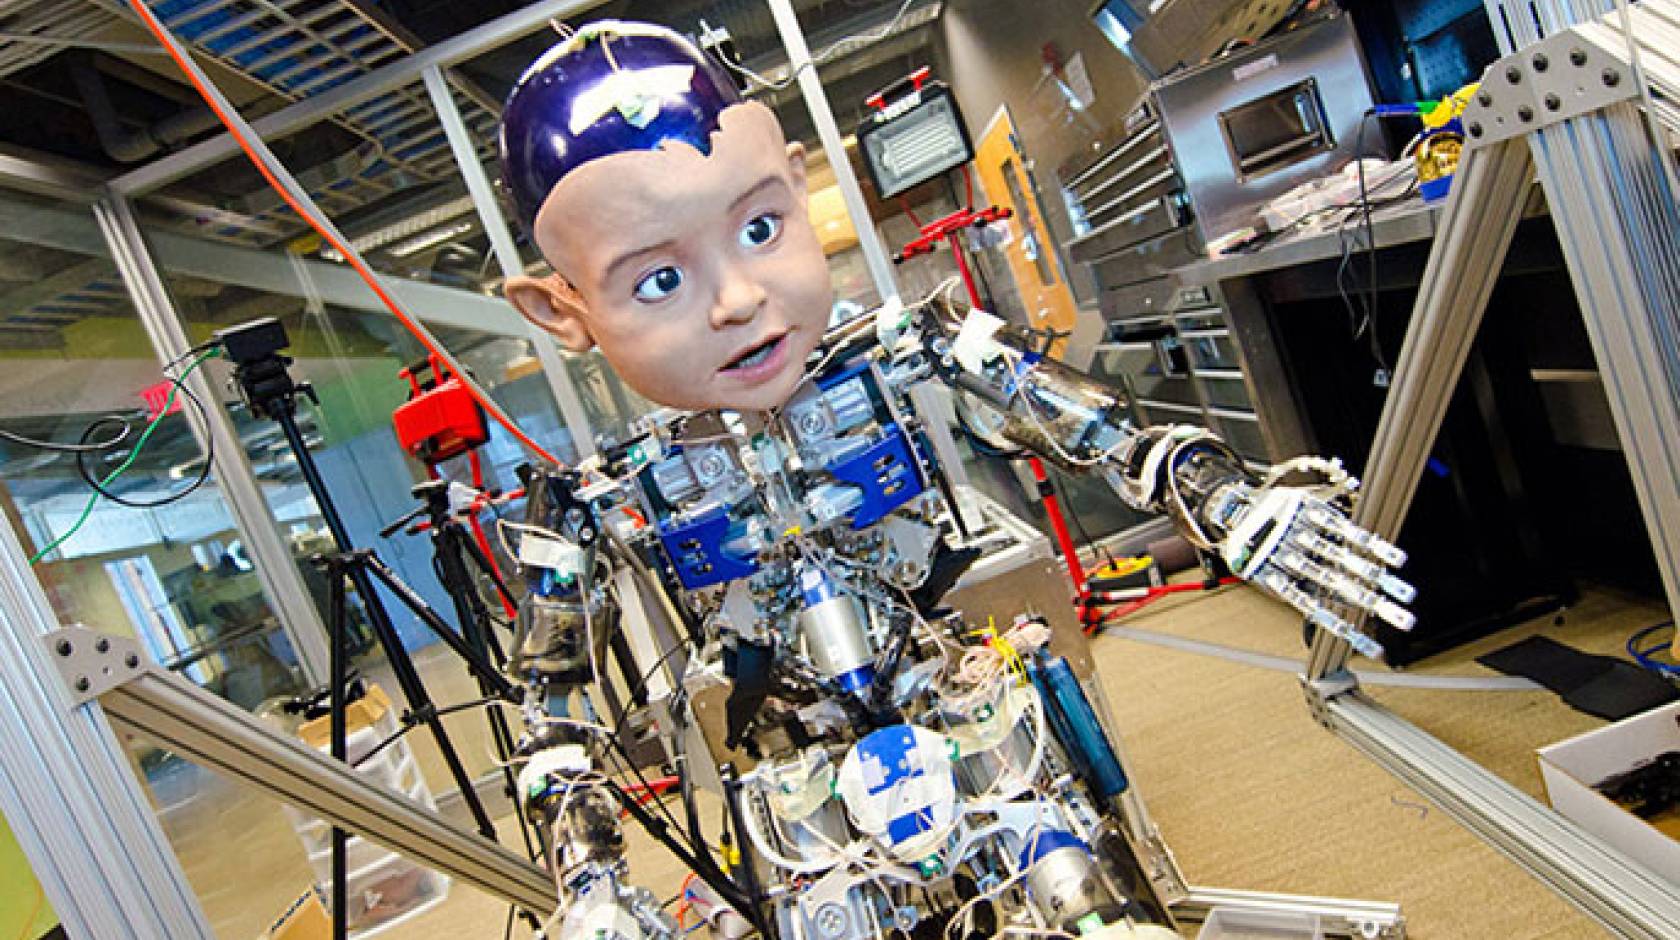 UC San Diego robotics